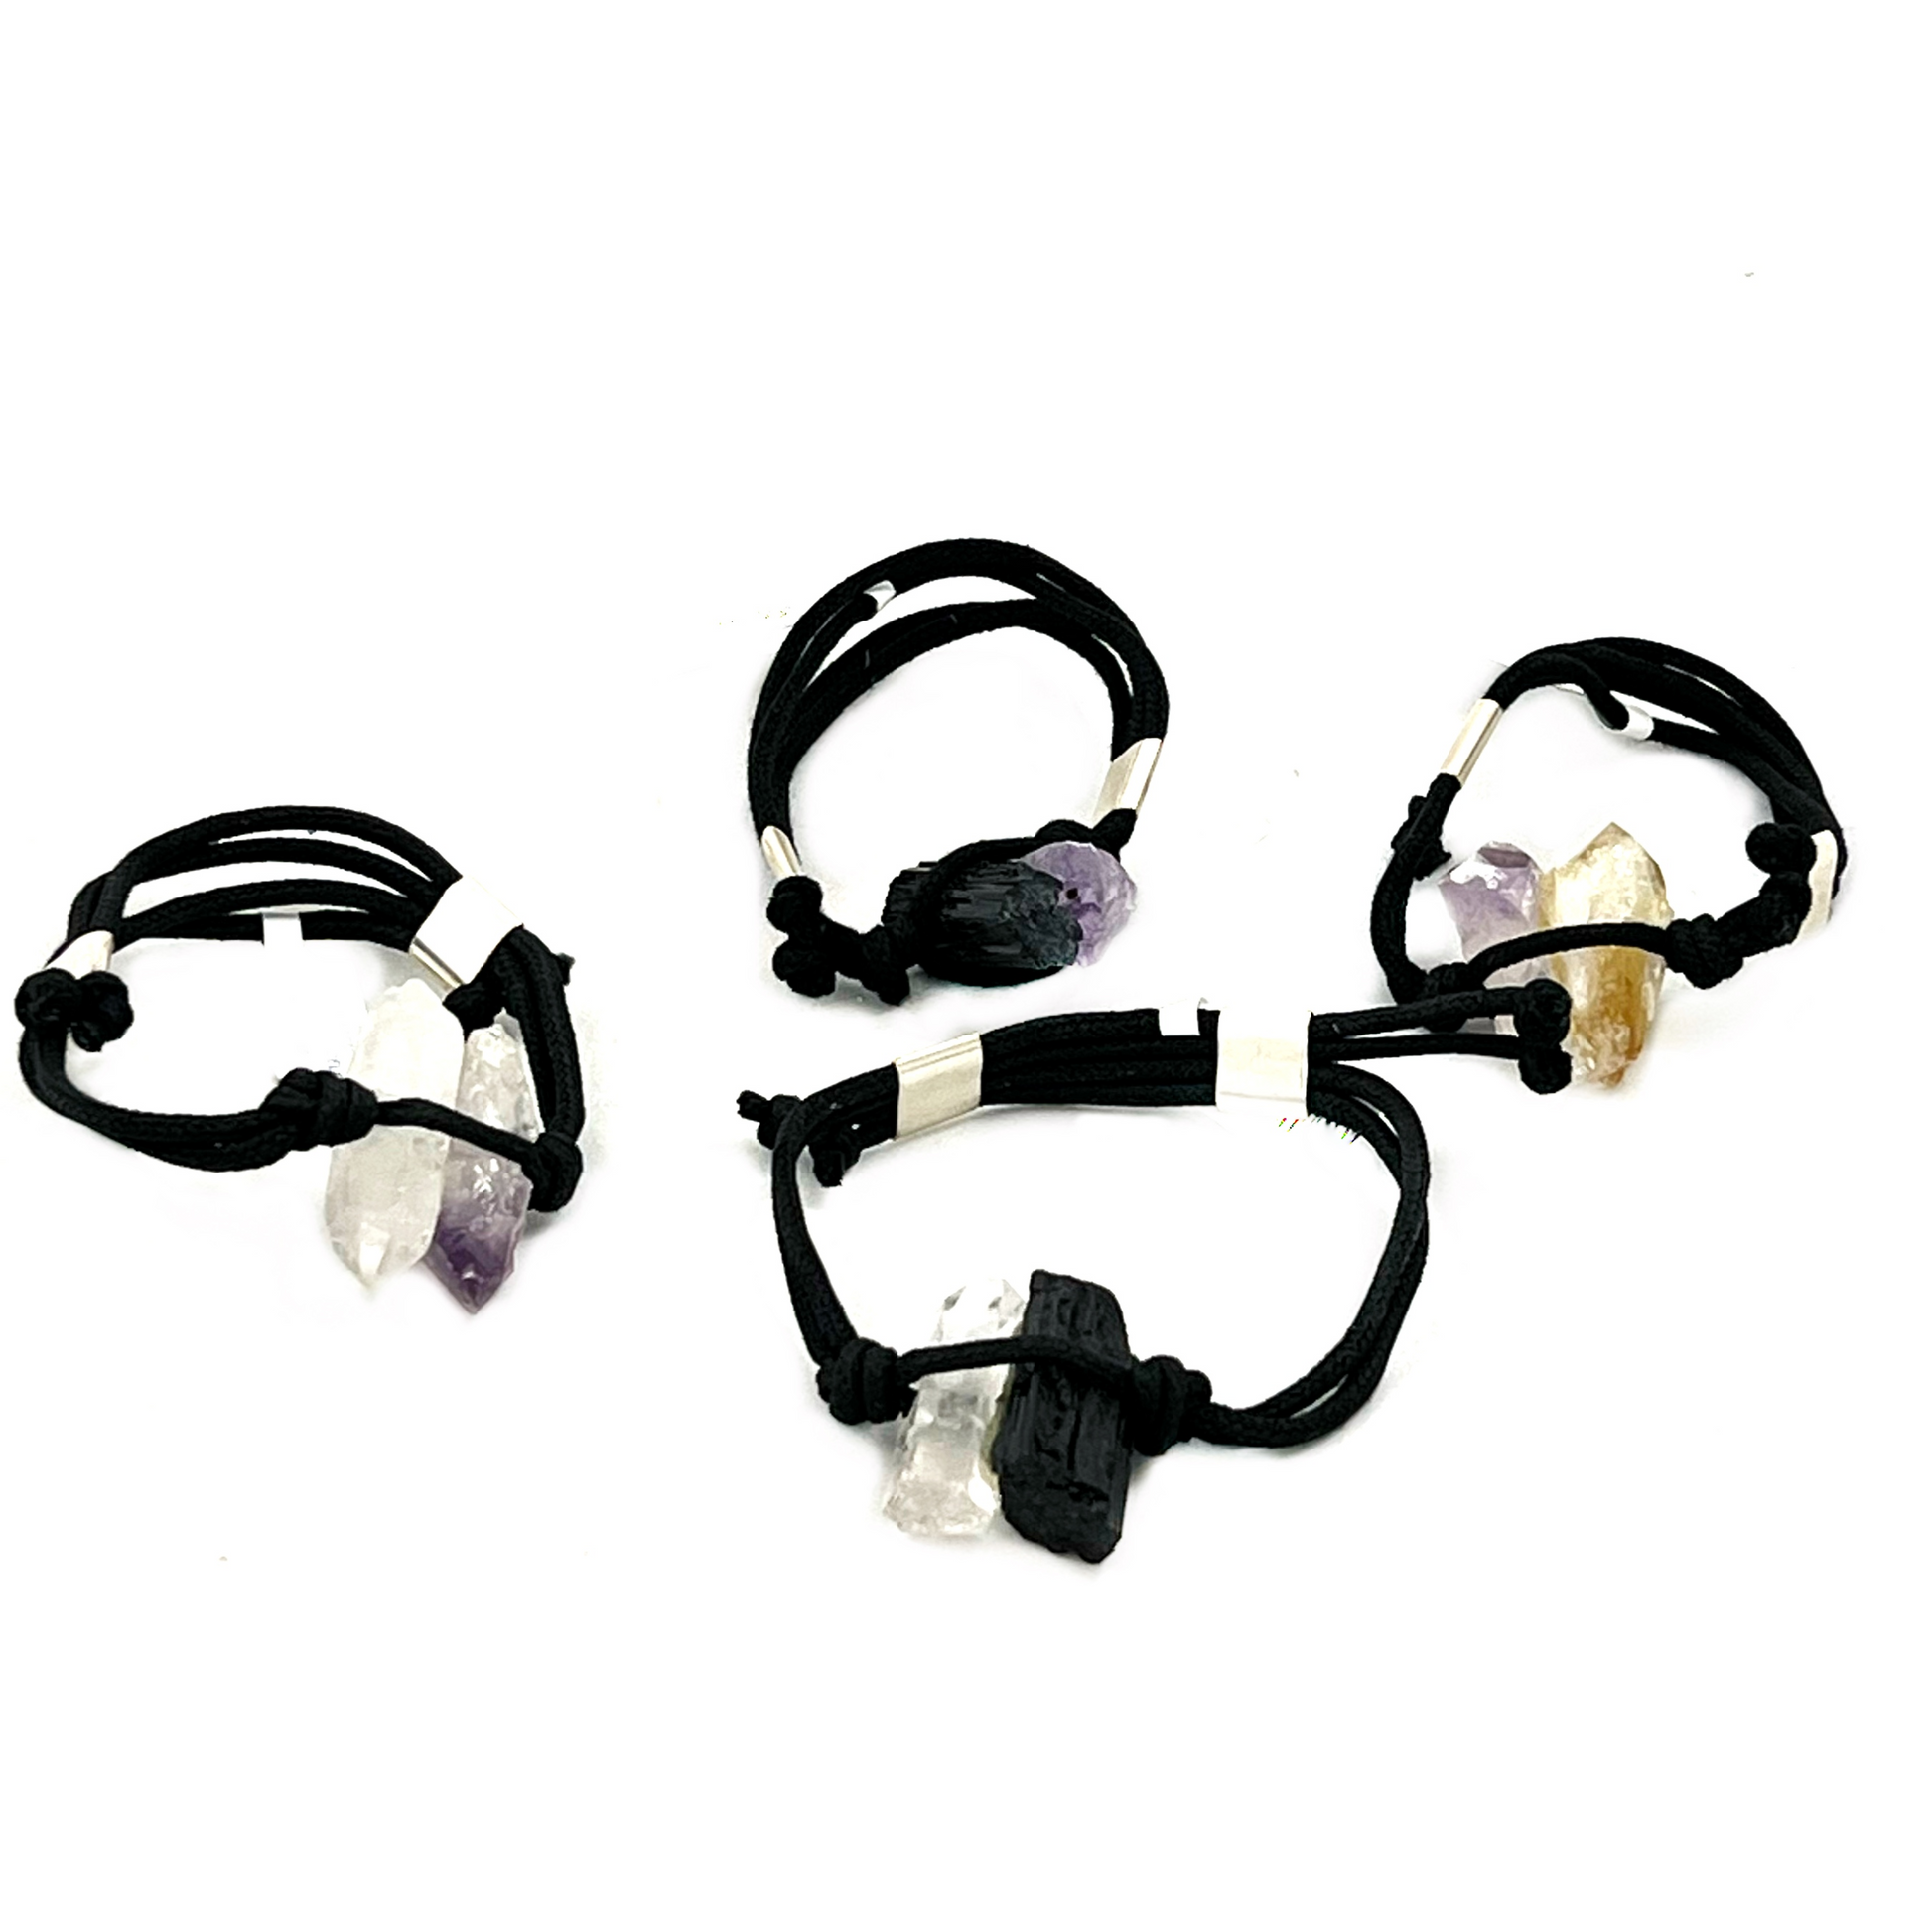 2-stone bracelets on adjustable cord